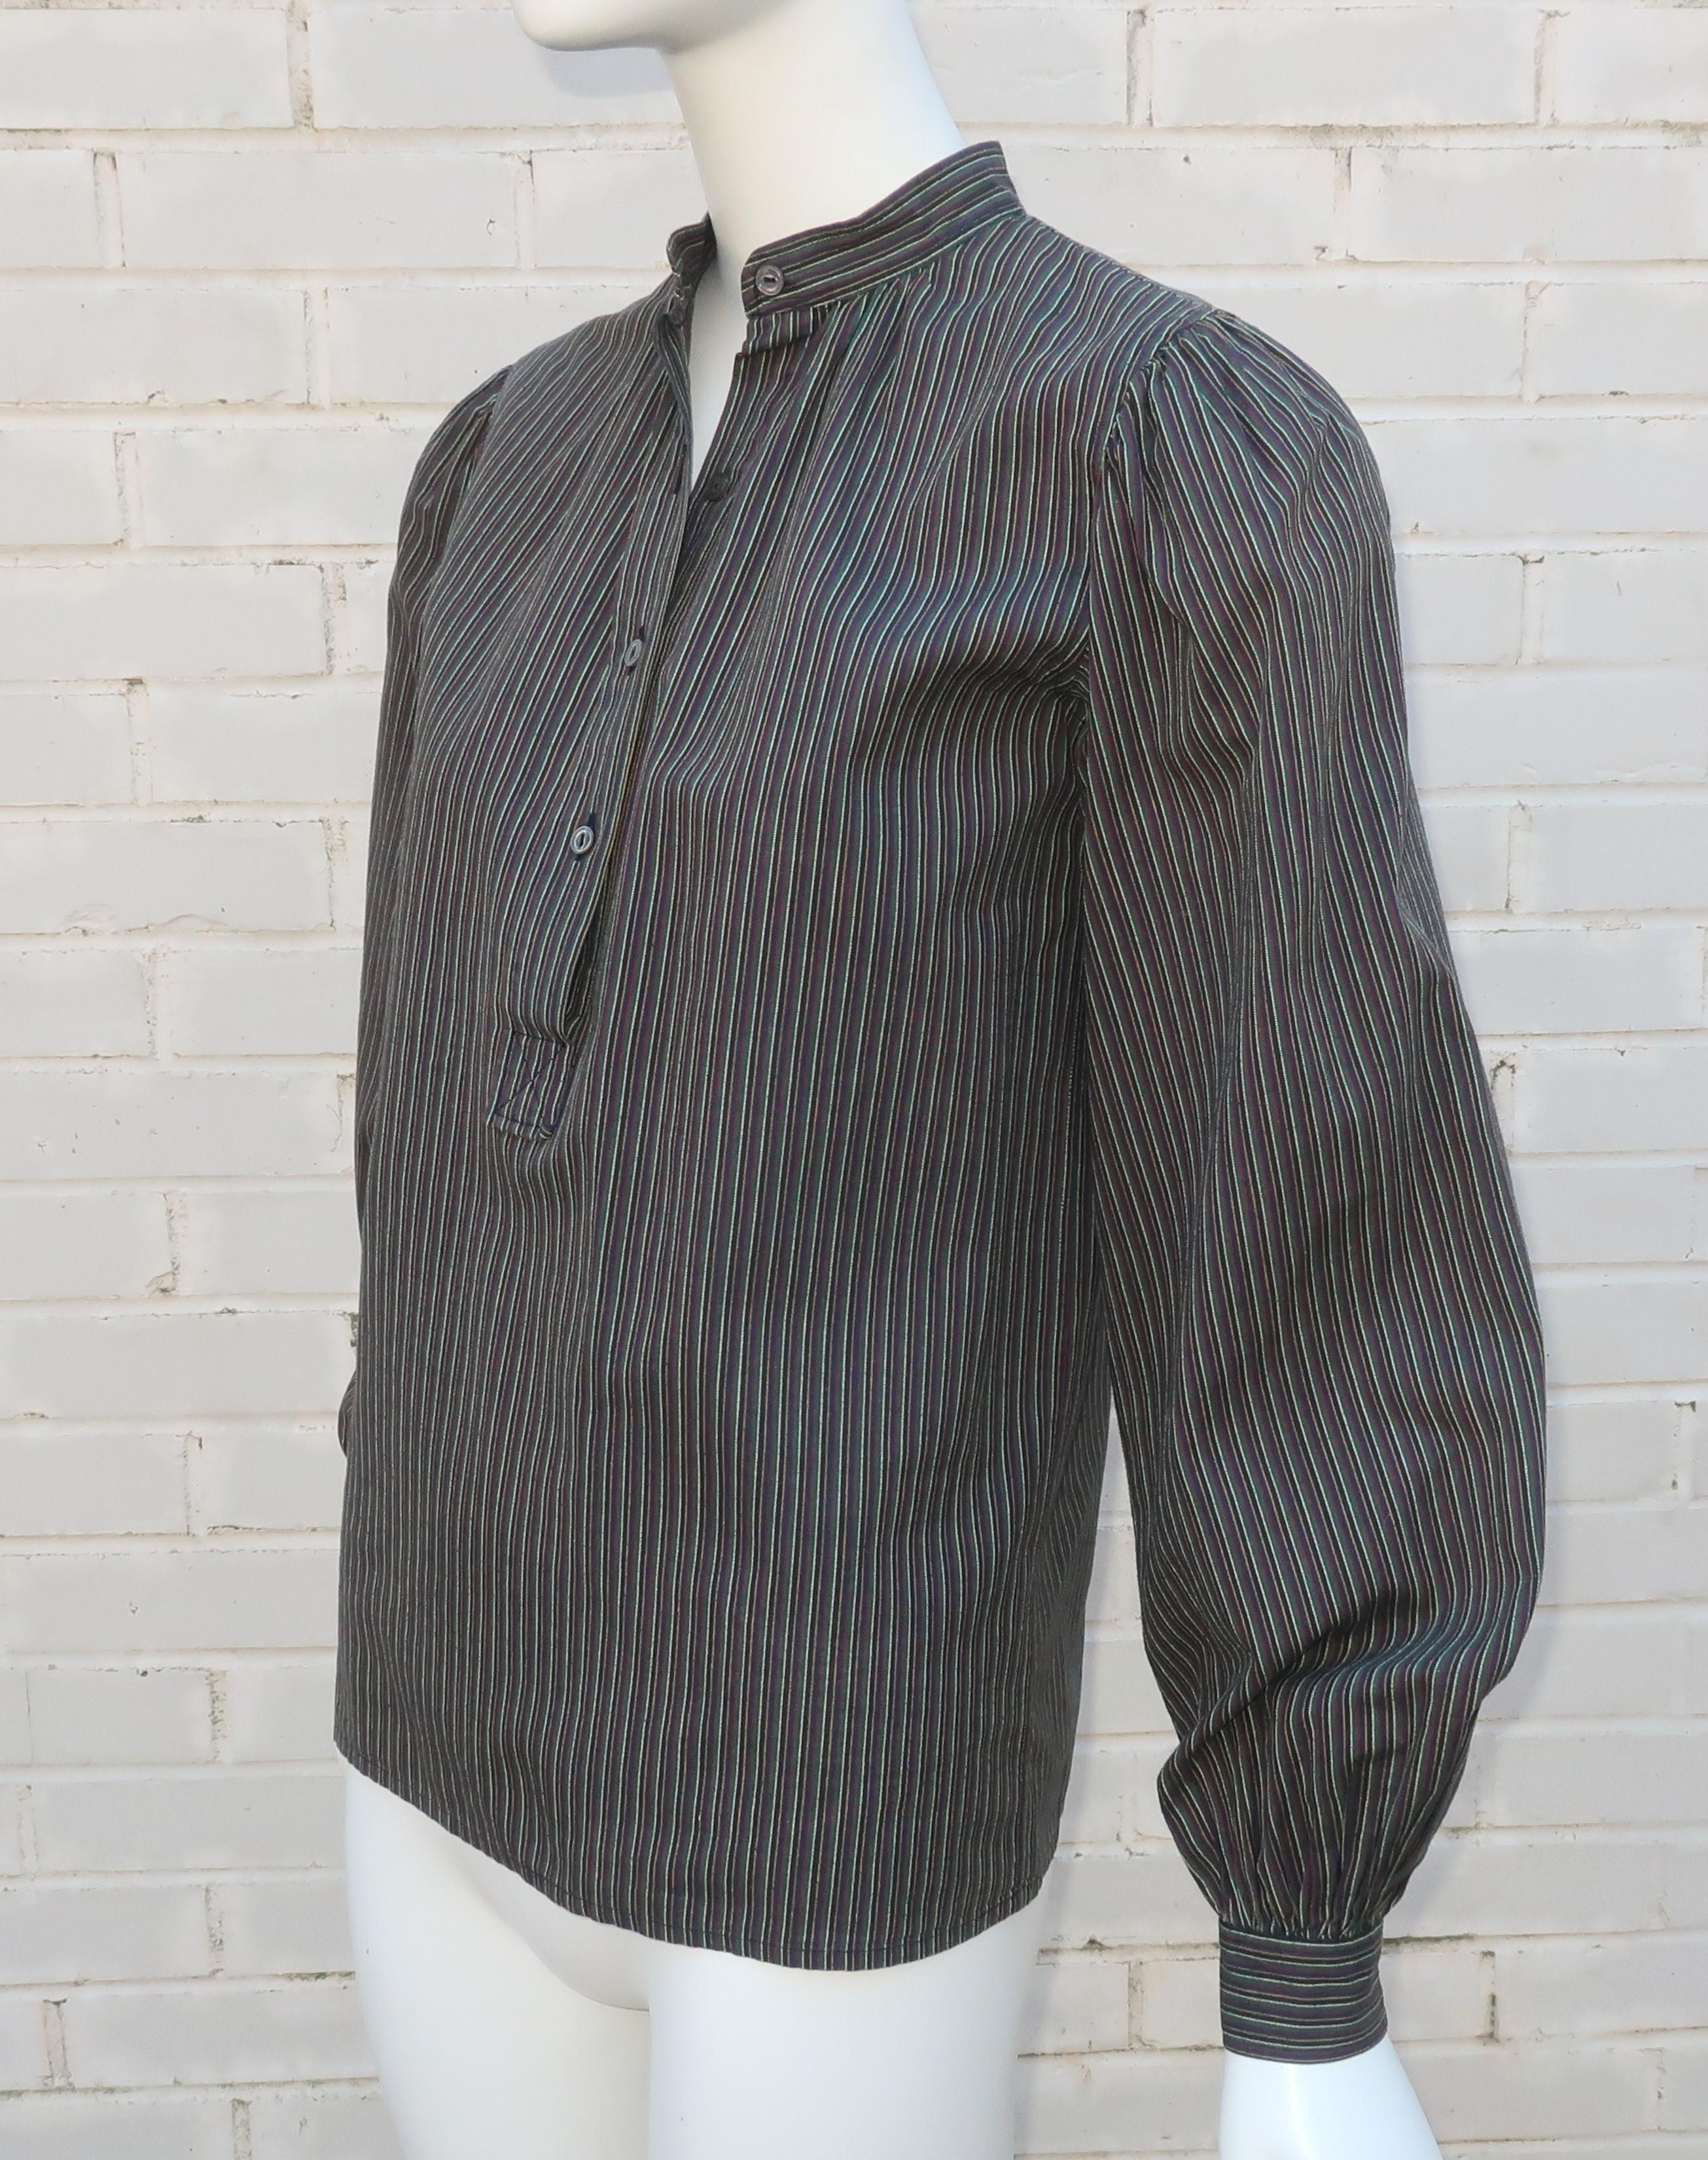 Yves Saint Laurent Striped Cotton Peasant Style Blouse, 1970's For Sale 2